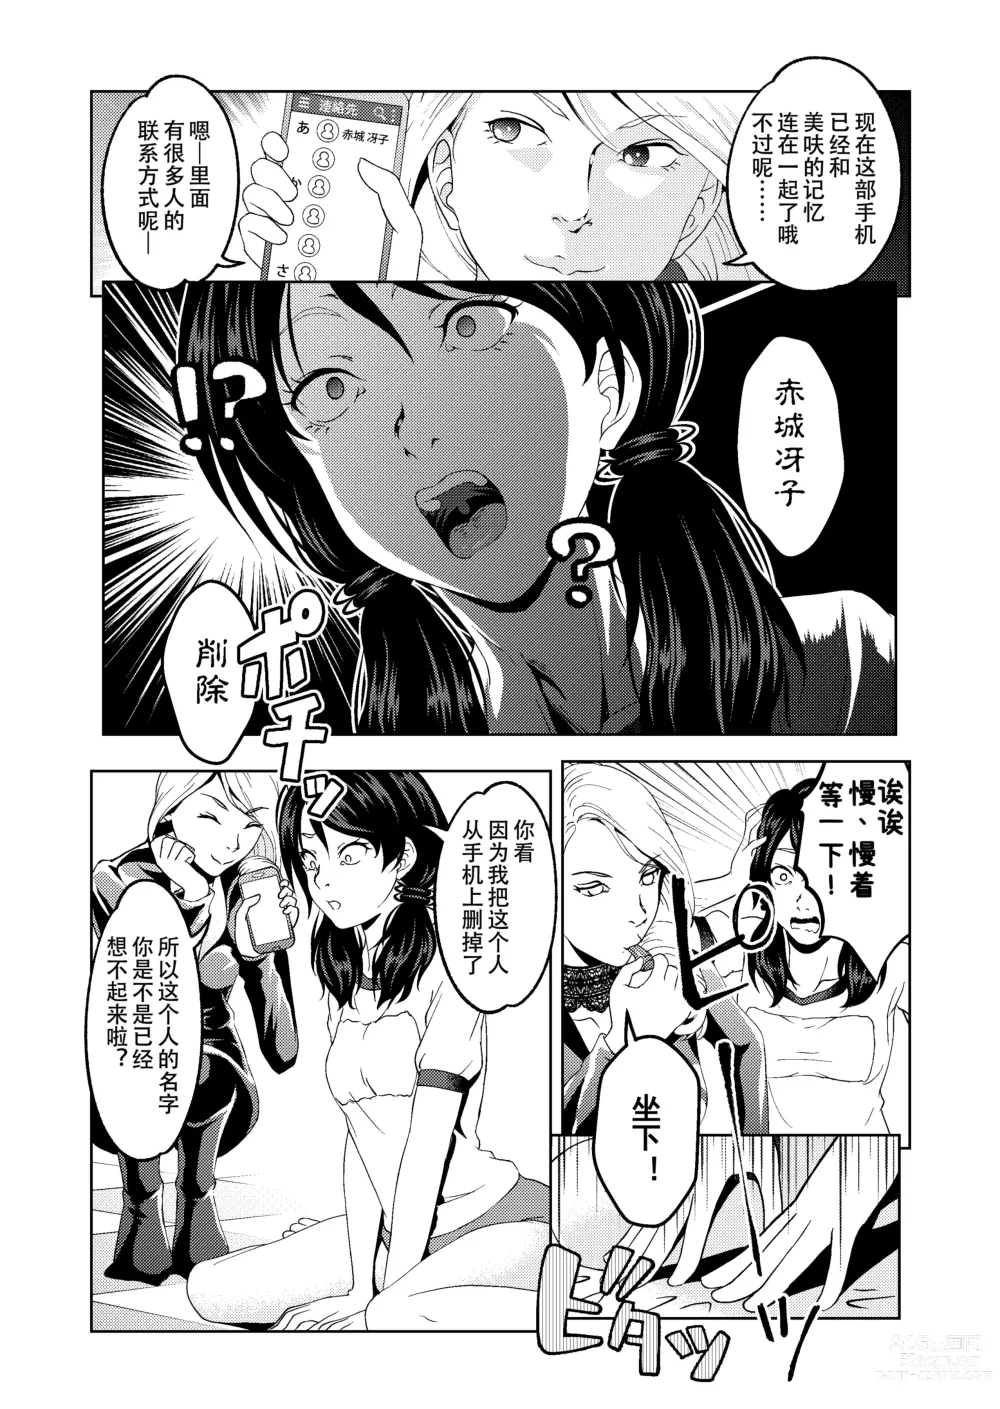 Page 13 of doujinshi Saimin Stream #1.5